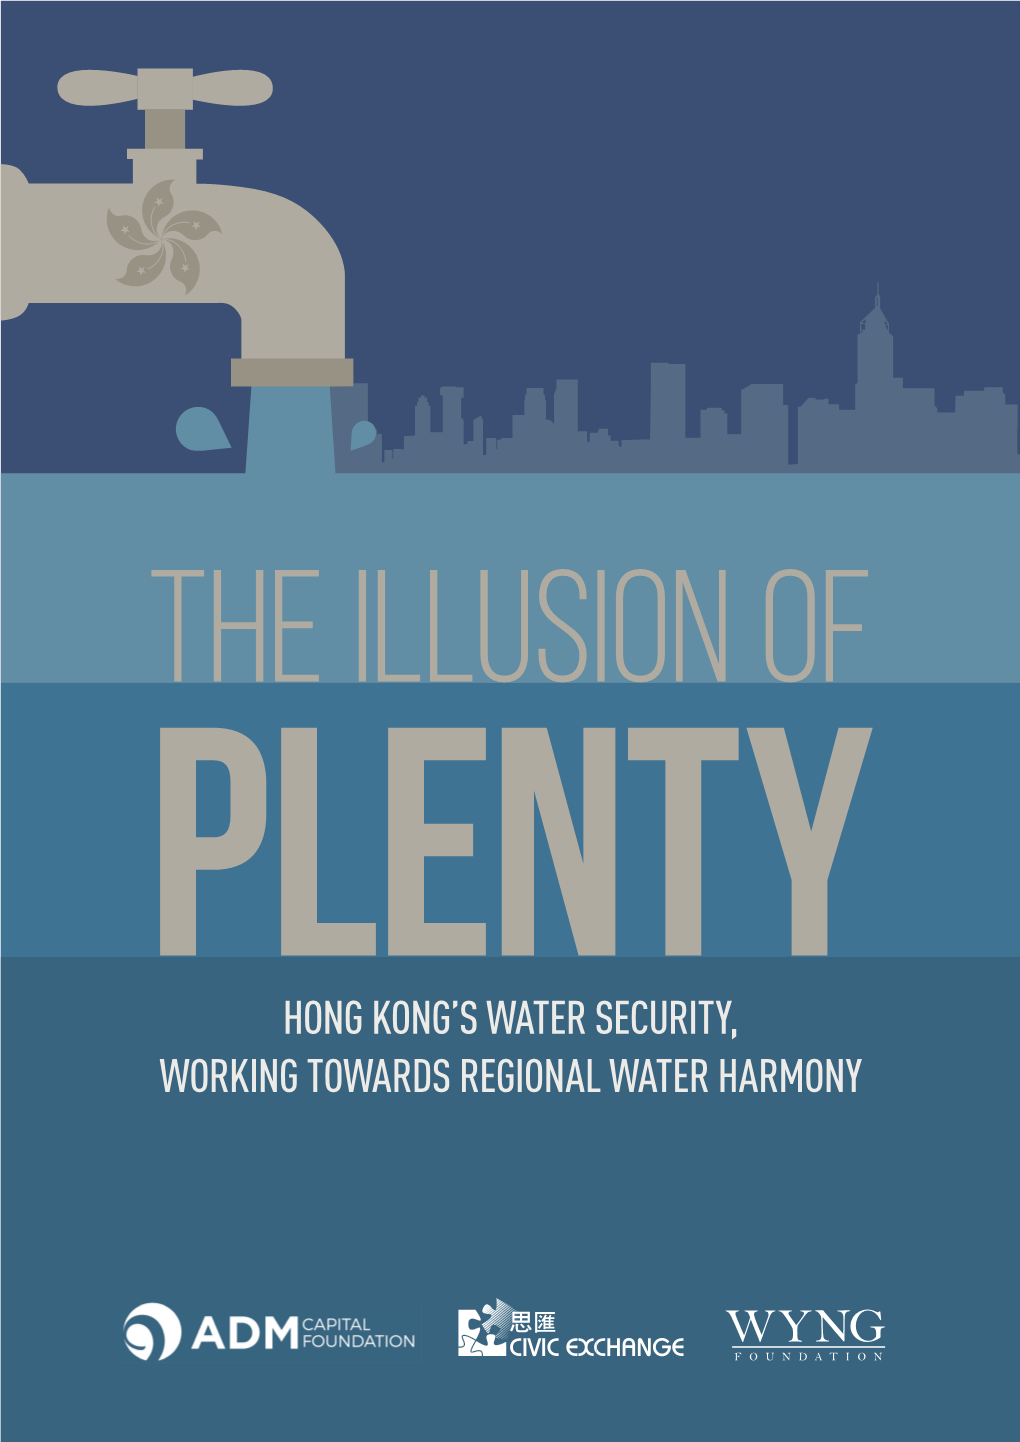 Hong Kong's Water Security, Working Towards Regional Water Harmony